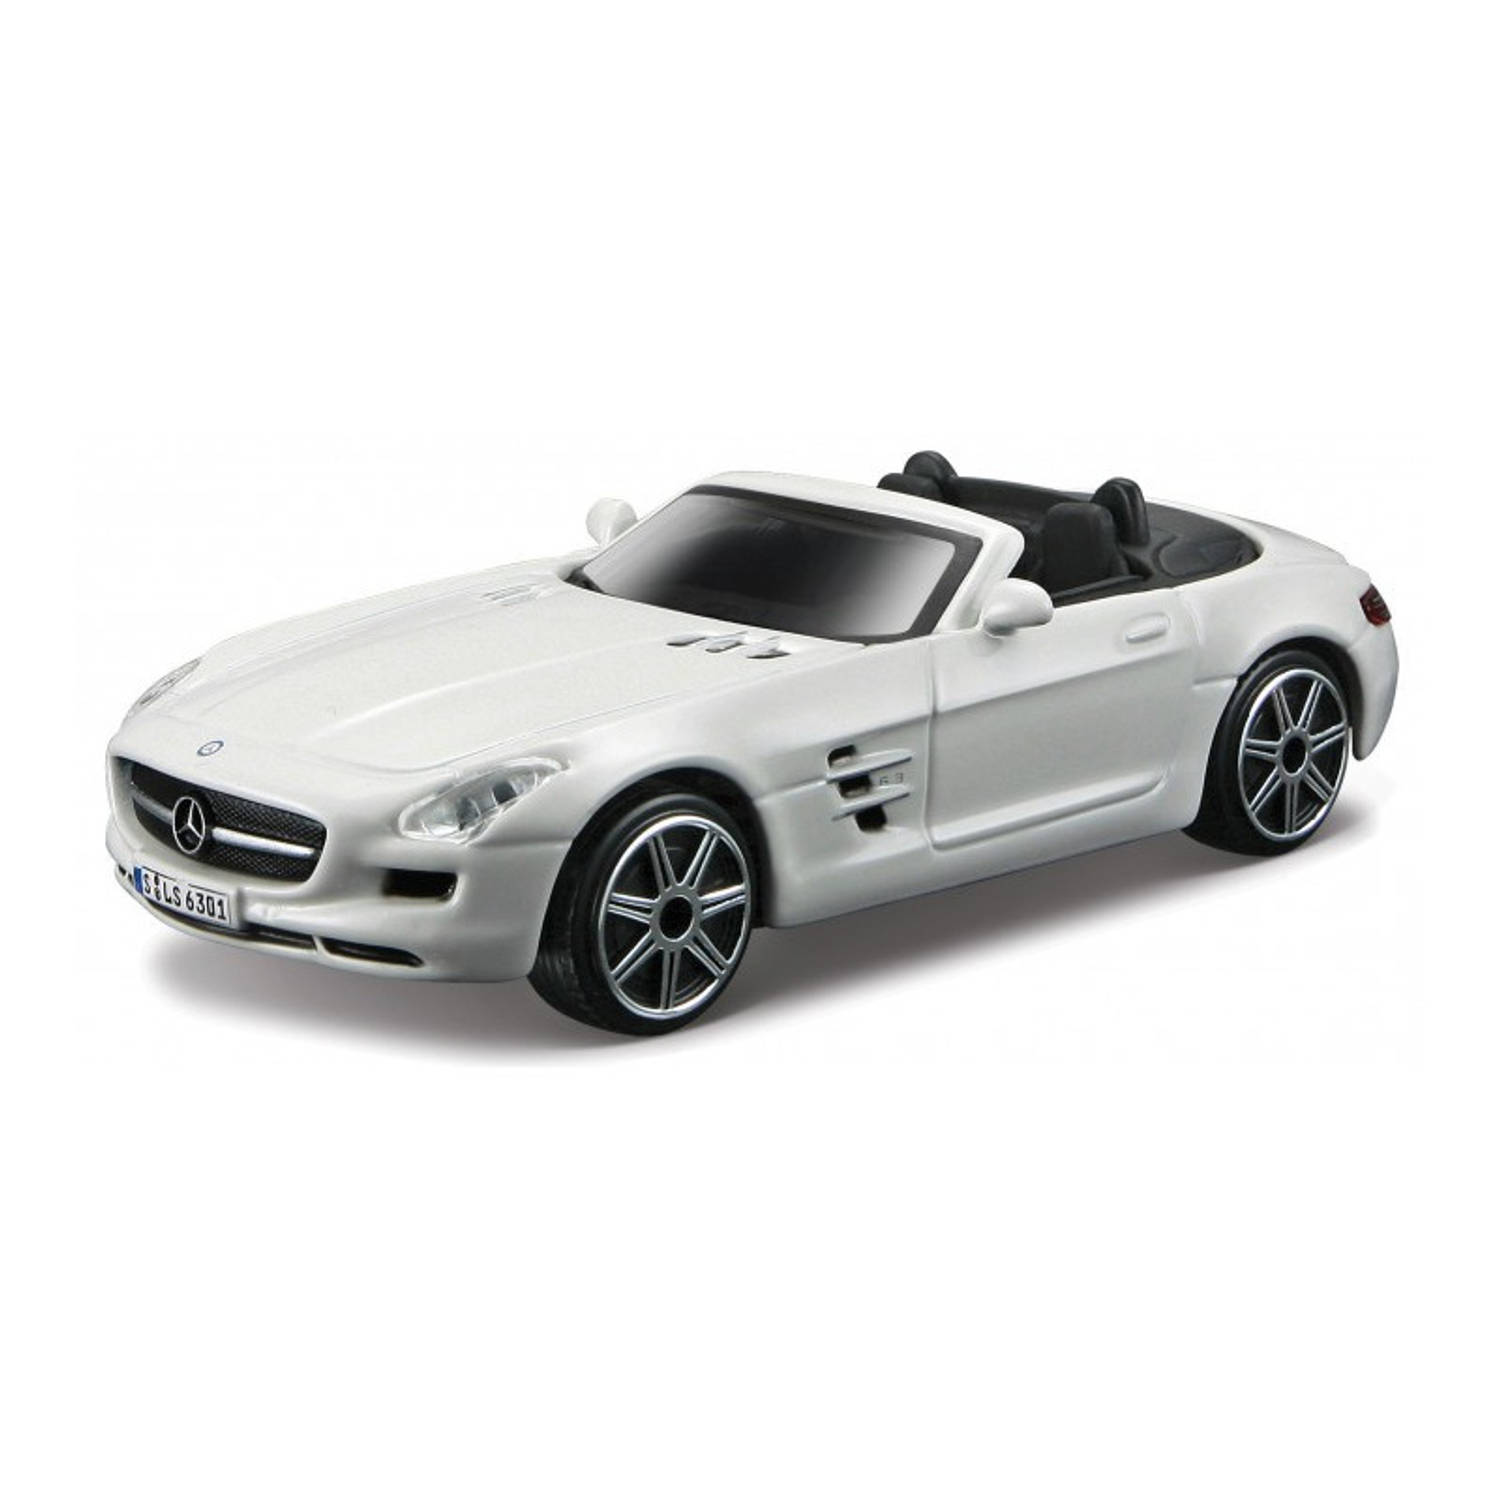 Modelauto Mercedes-benz Sls Amg Wit 11 X 4 X 3 Cm Schaal 1:43 Speelgoedauto Miniatuurauto